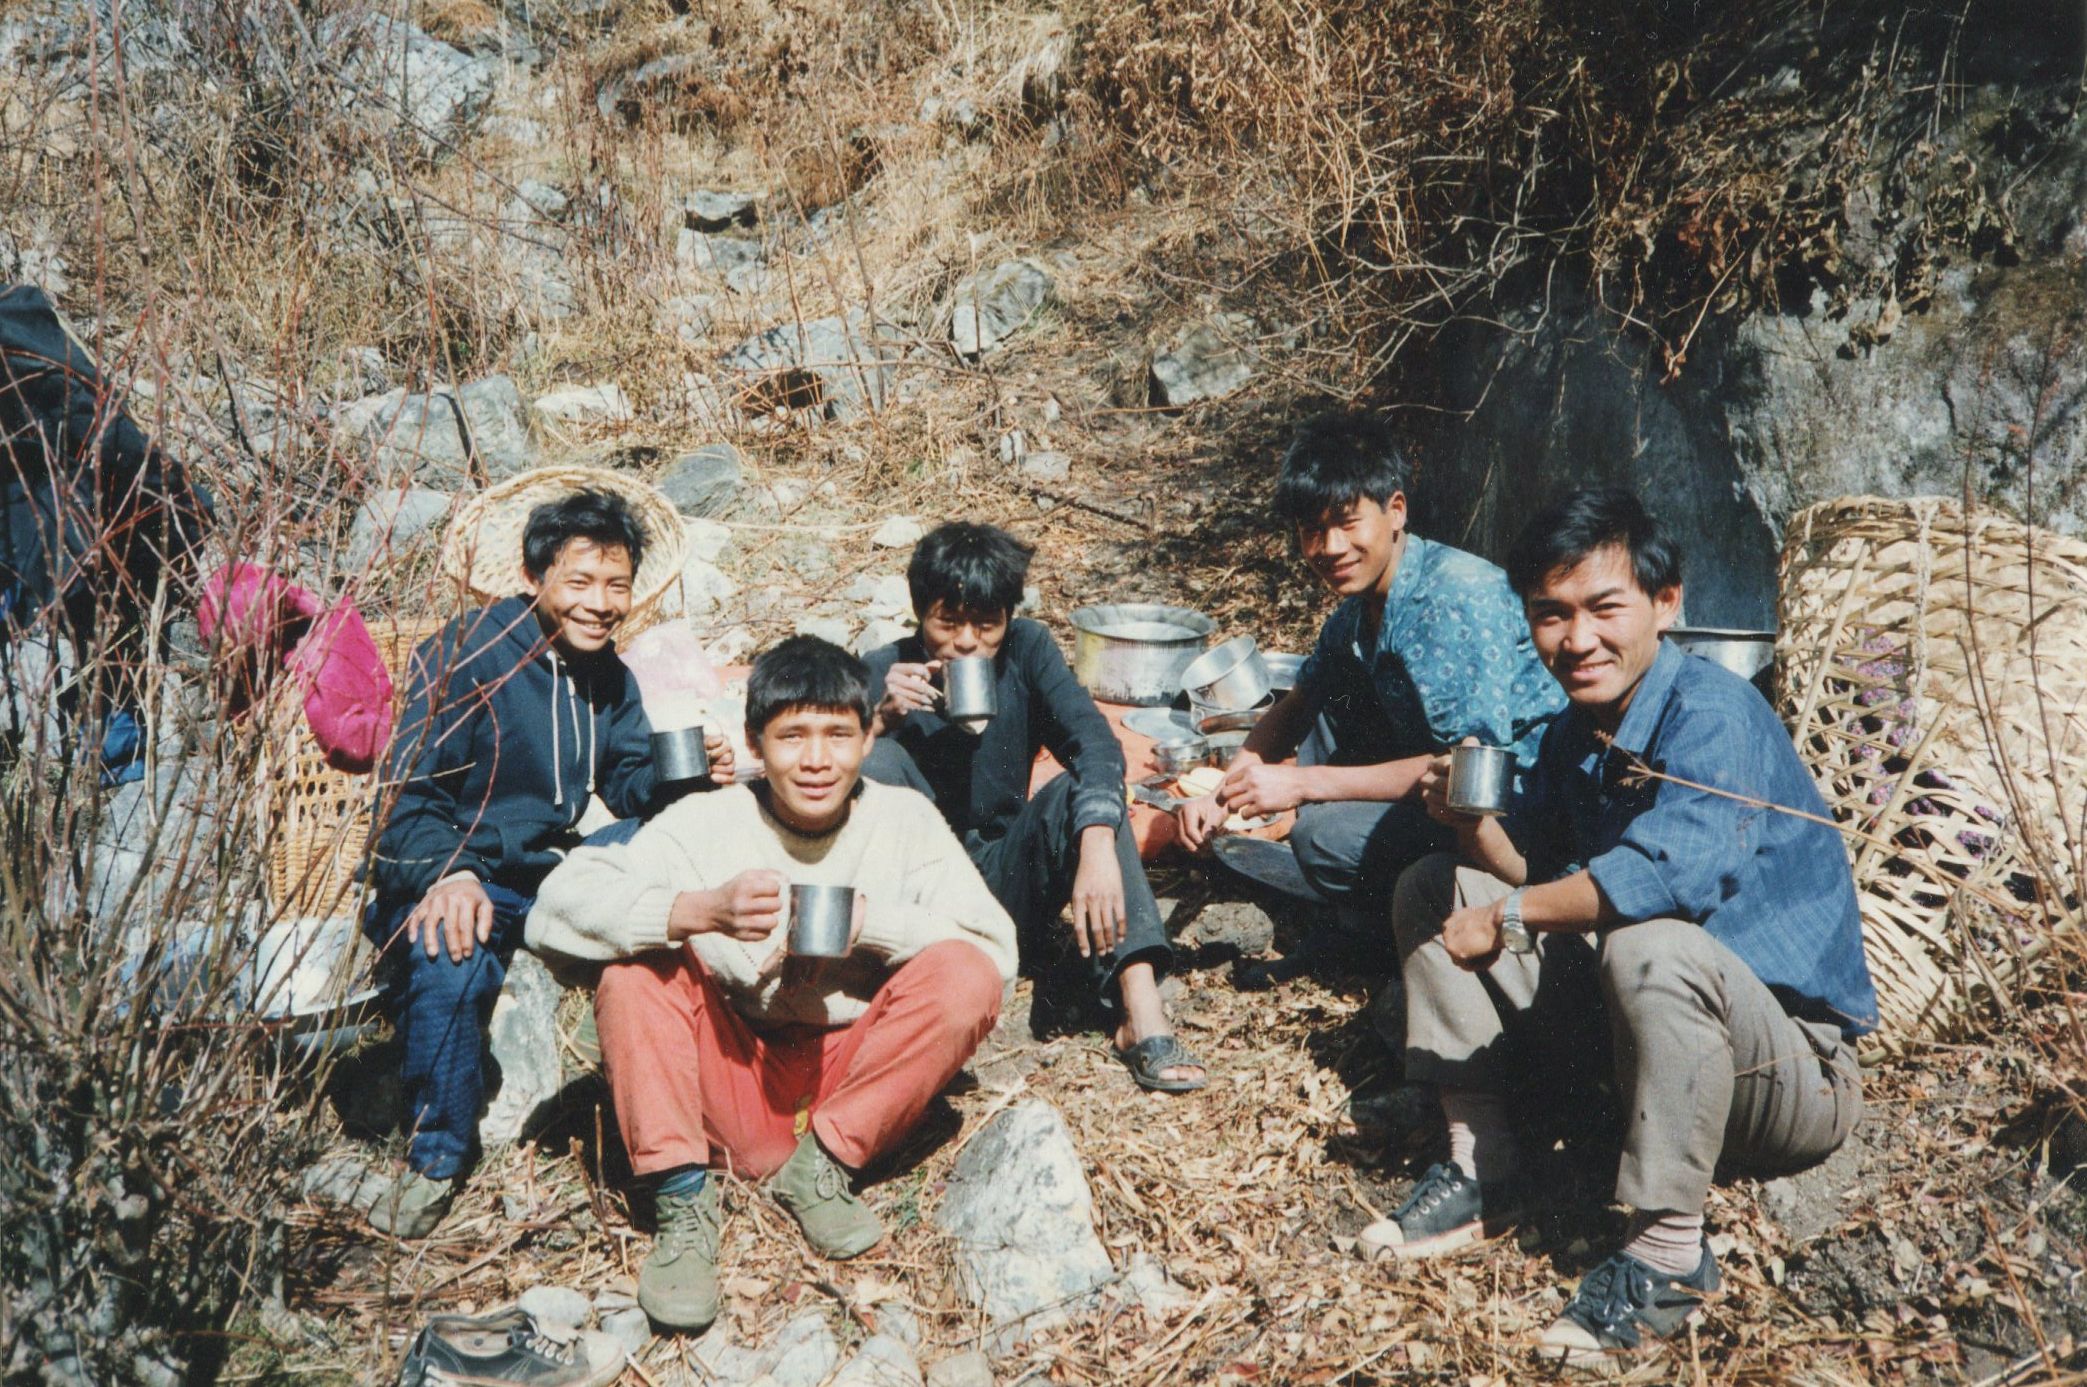 Trekking crew in Langtang Valley of the Nepal Himalaya